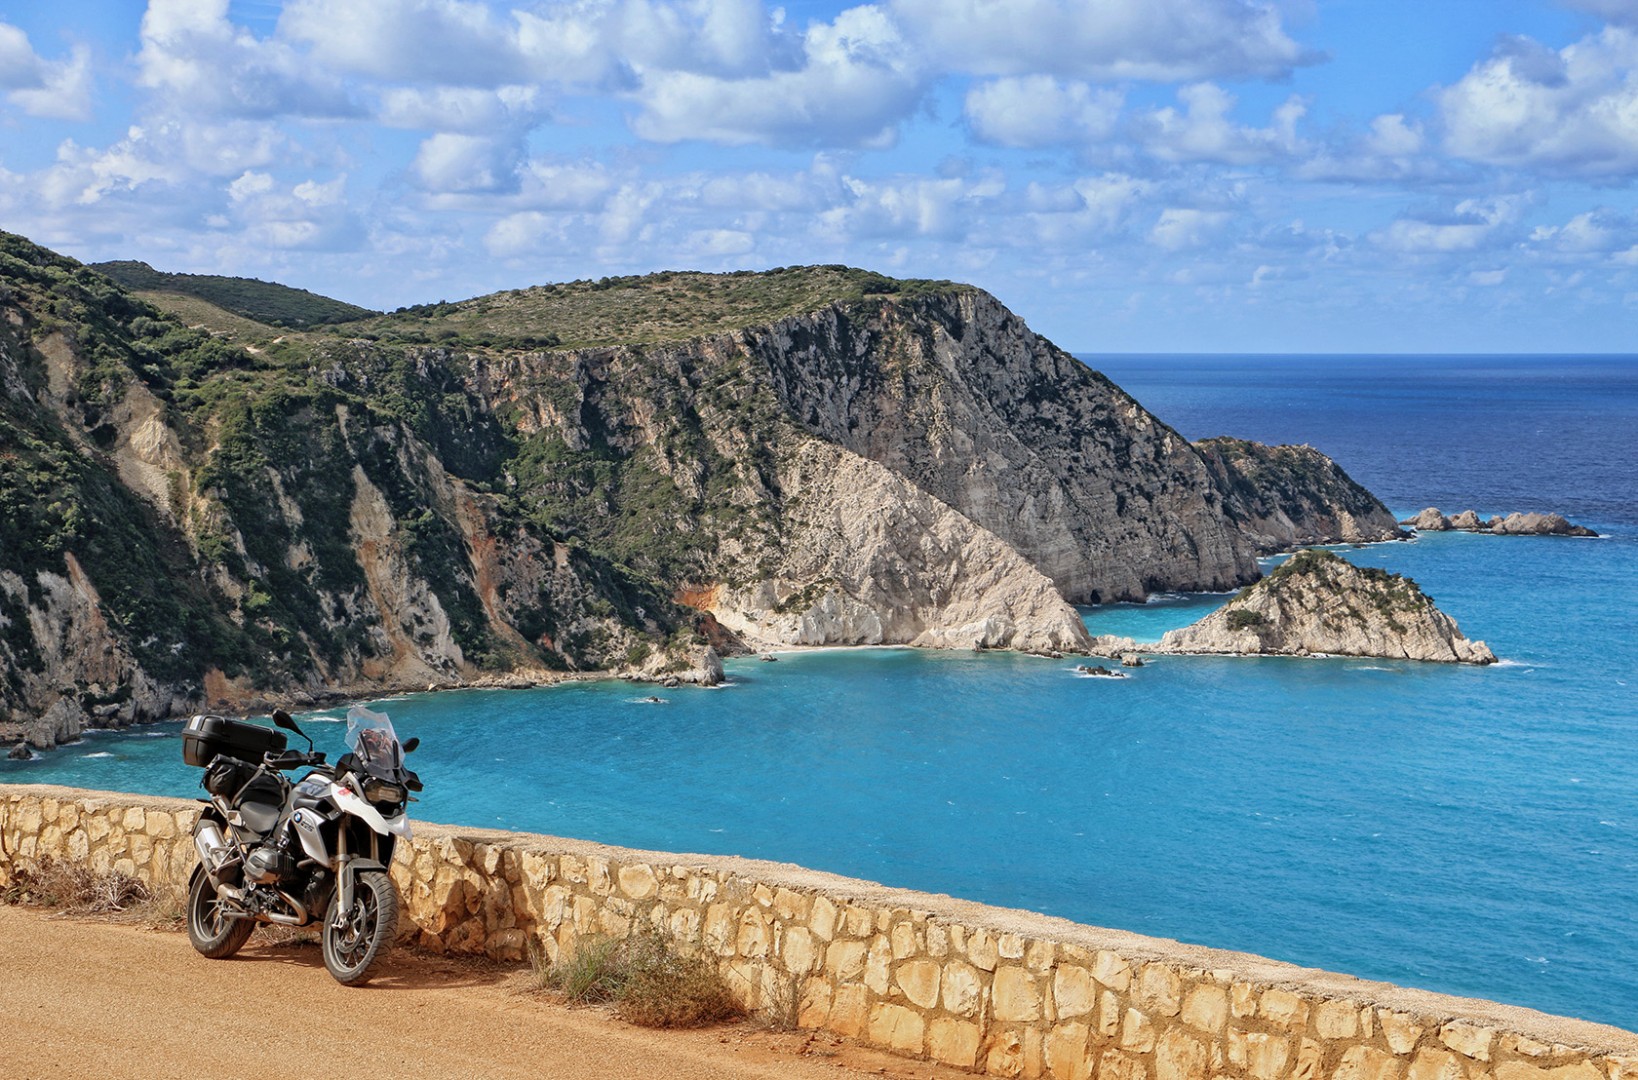 Greece Motorcycle Tour